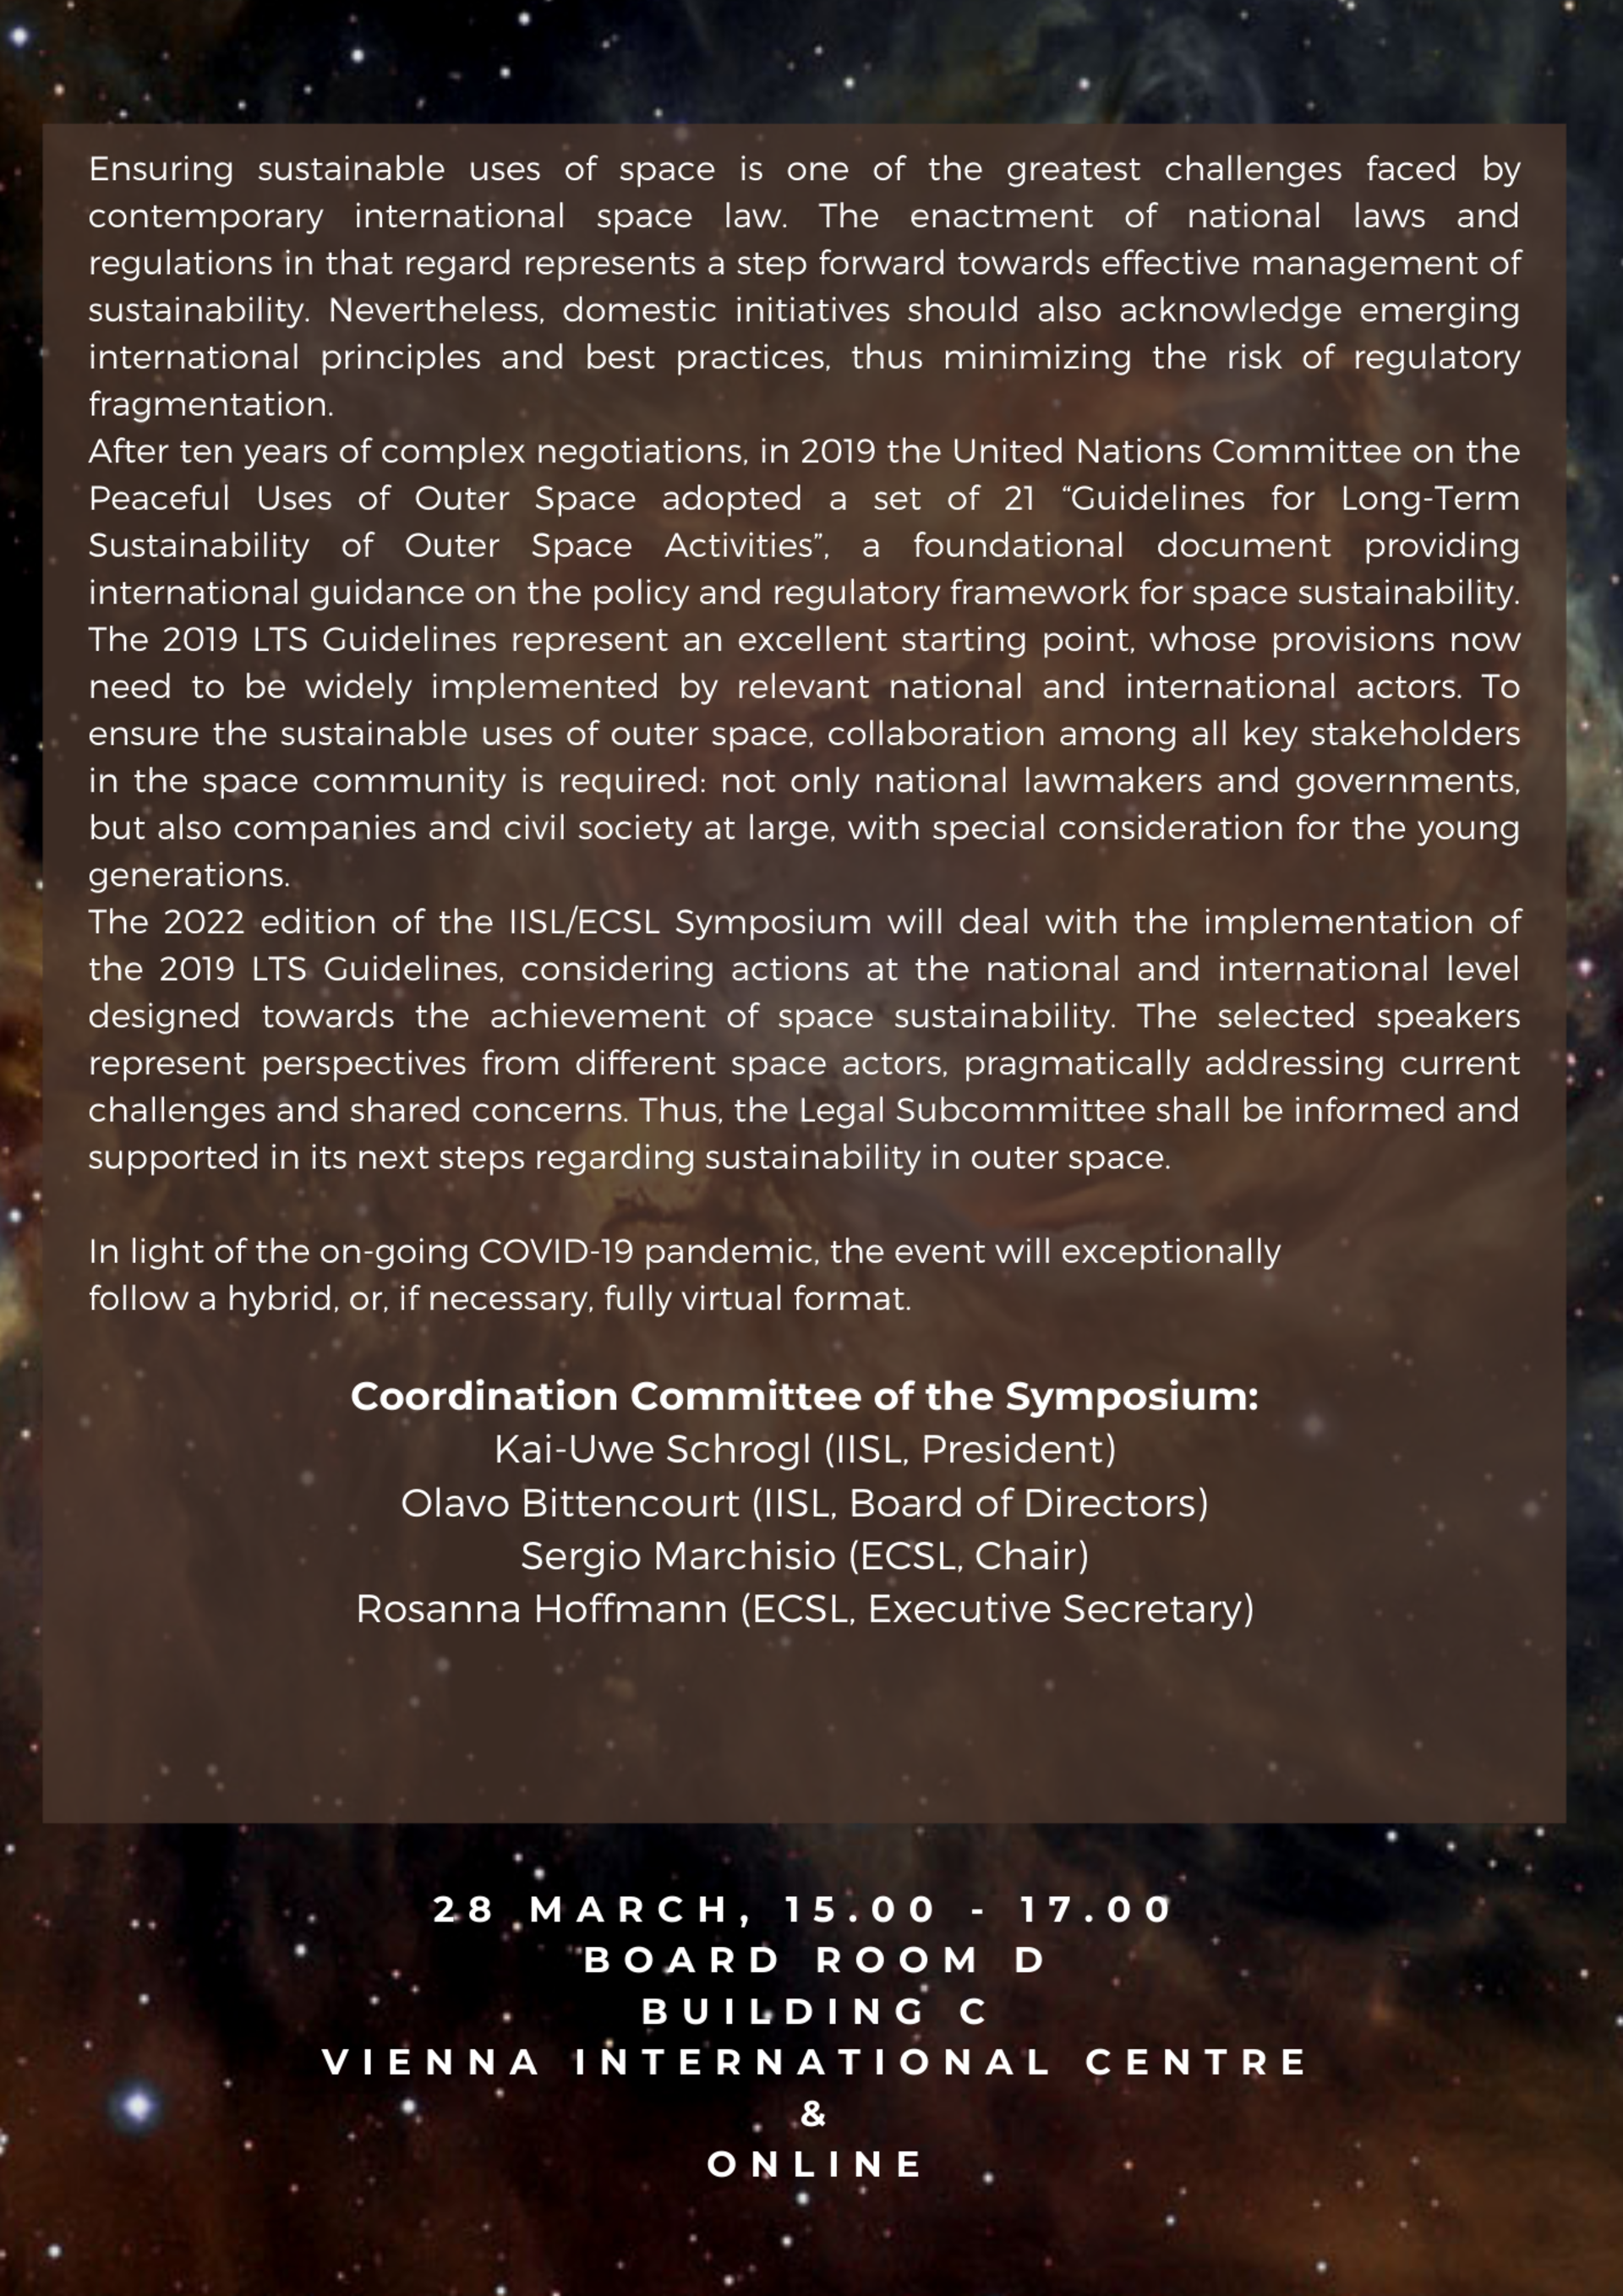 IISL-ECSL Symposium 2022 - Information